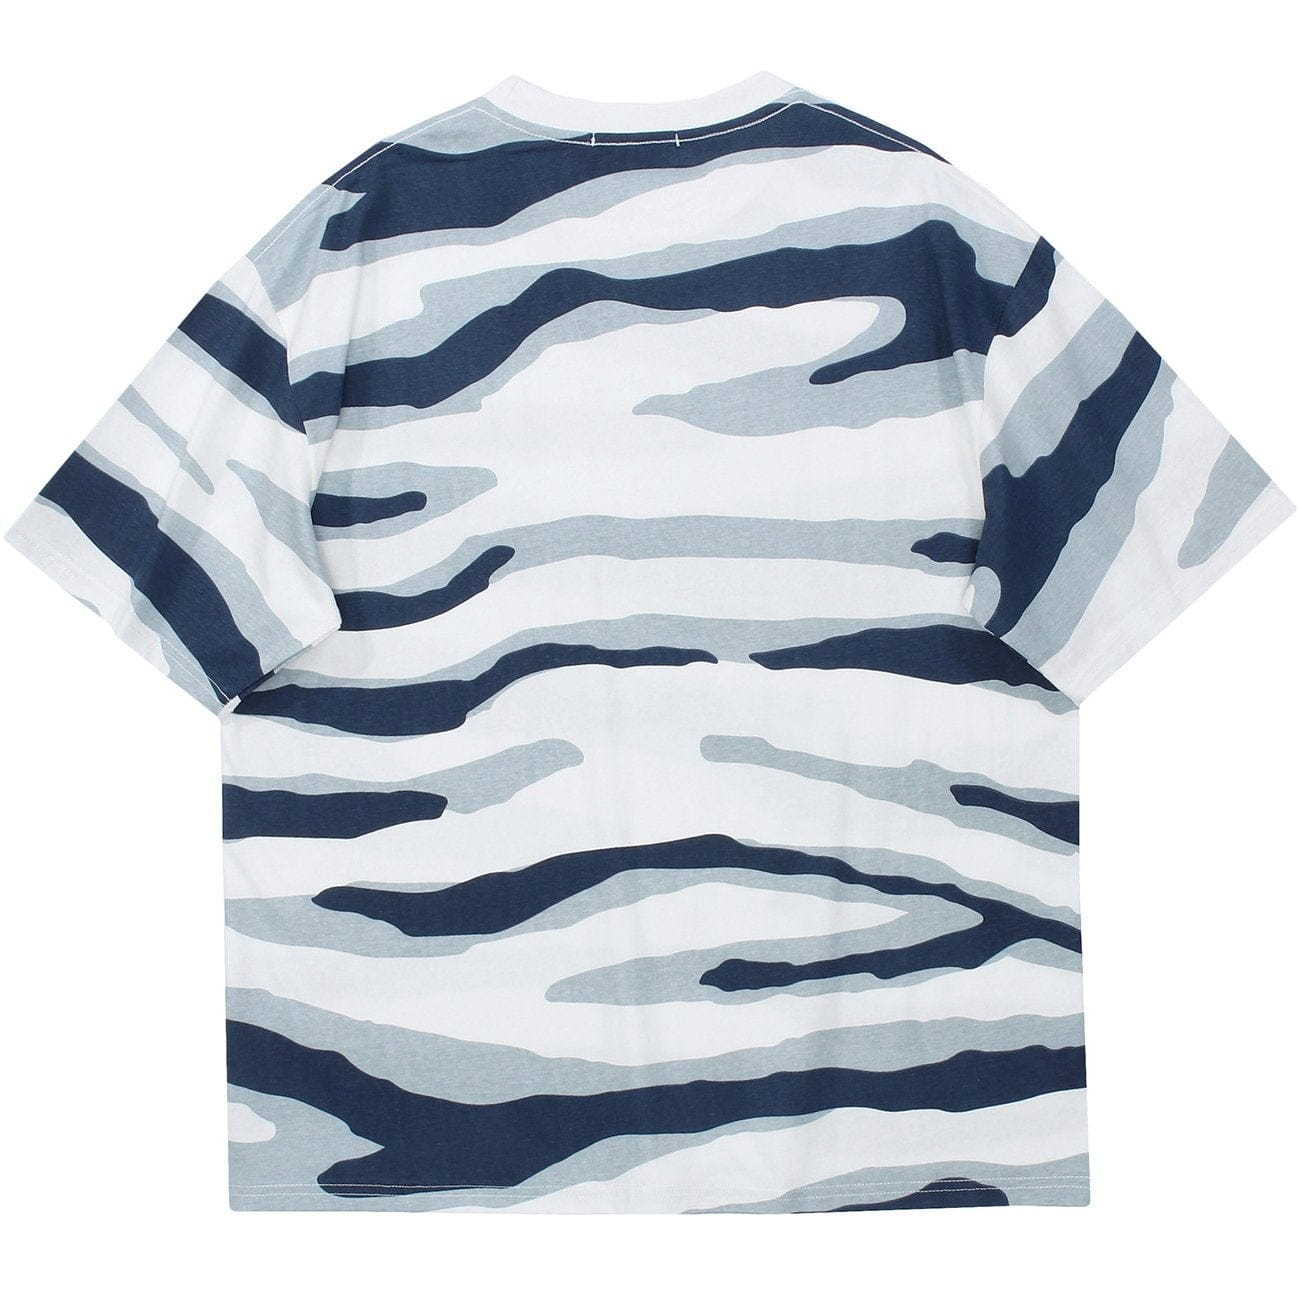 Zebra Pattern Full Print T-Shirt